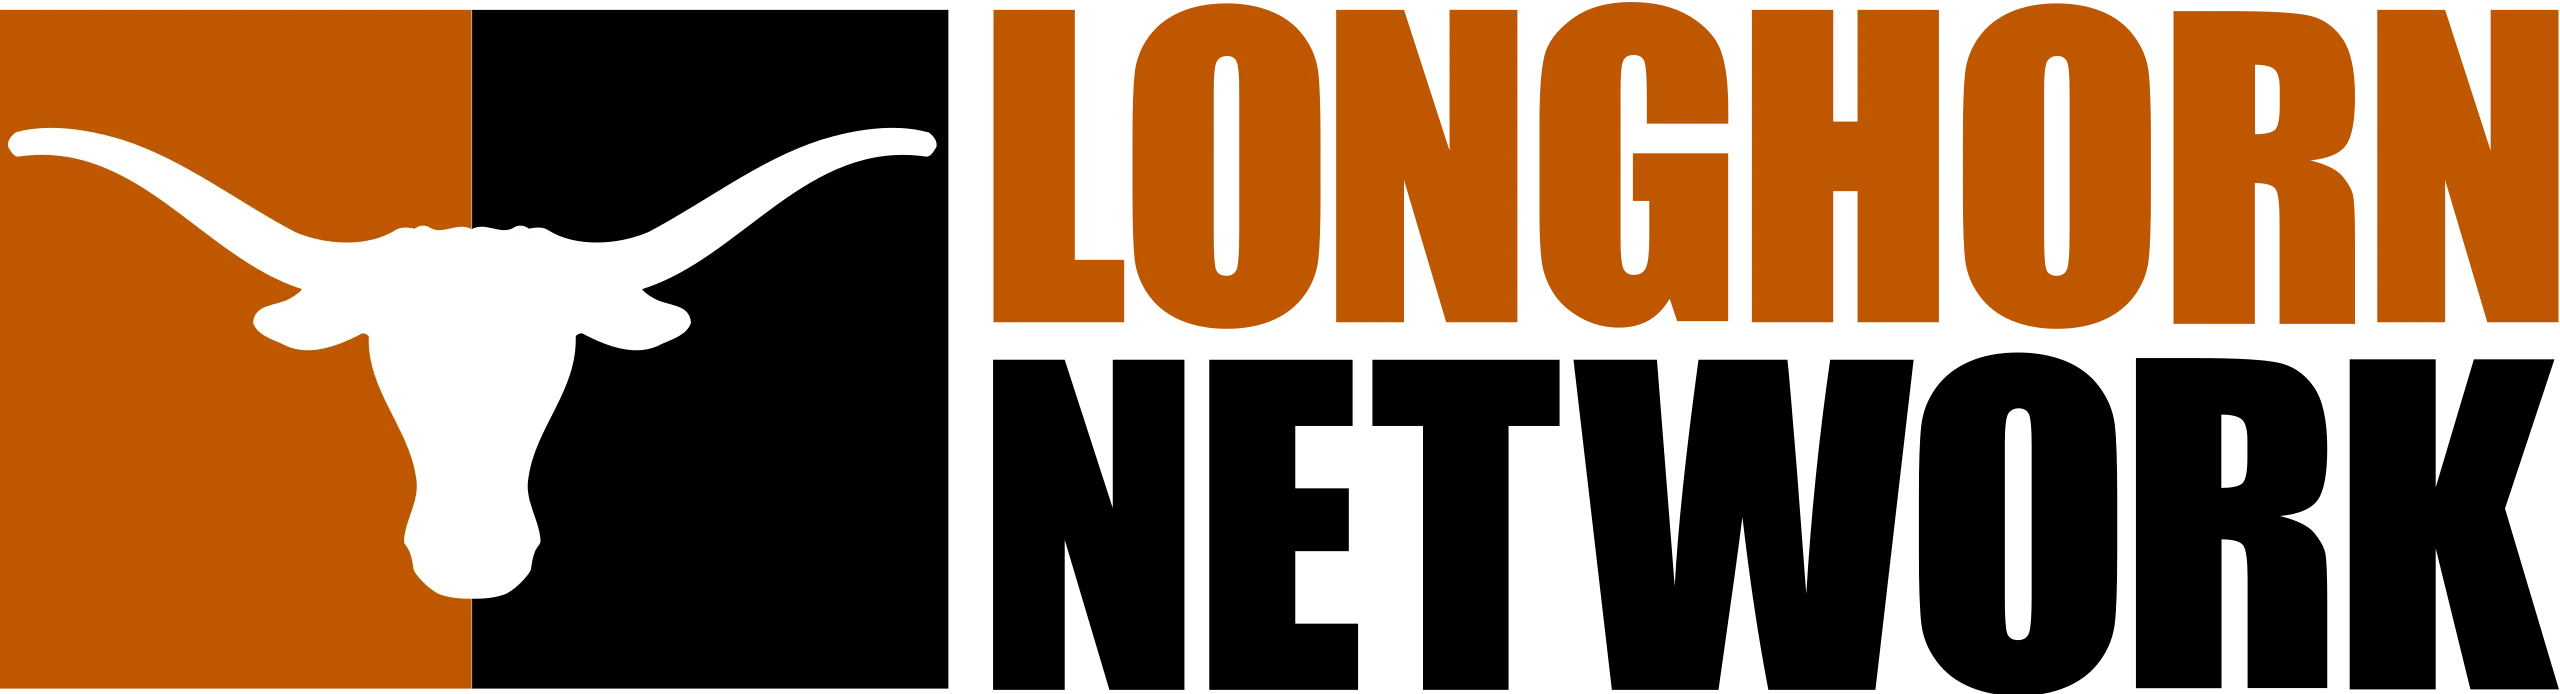 Longhorn Network logo